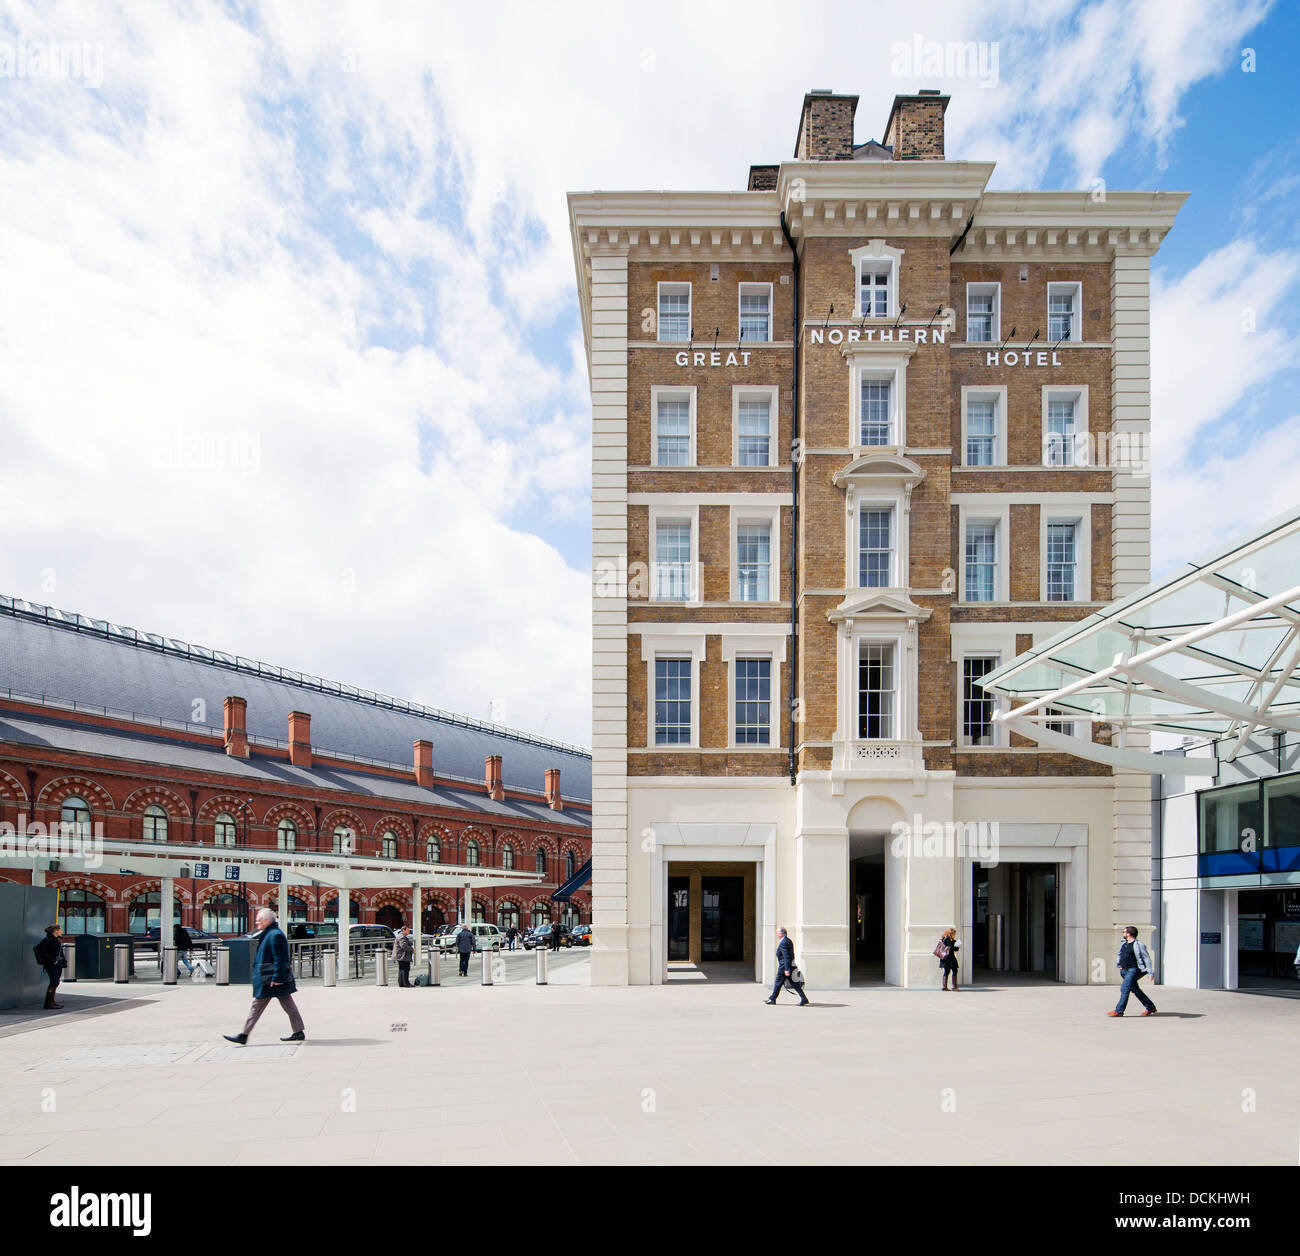 Great Northern Hotel, London, United Kingdom. Architect: Dexter Moren Associates, 2013. Stock Photo